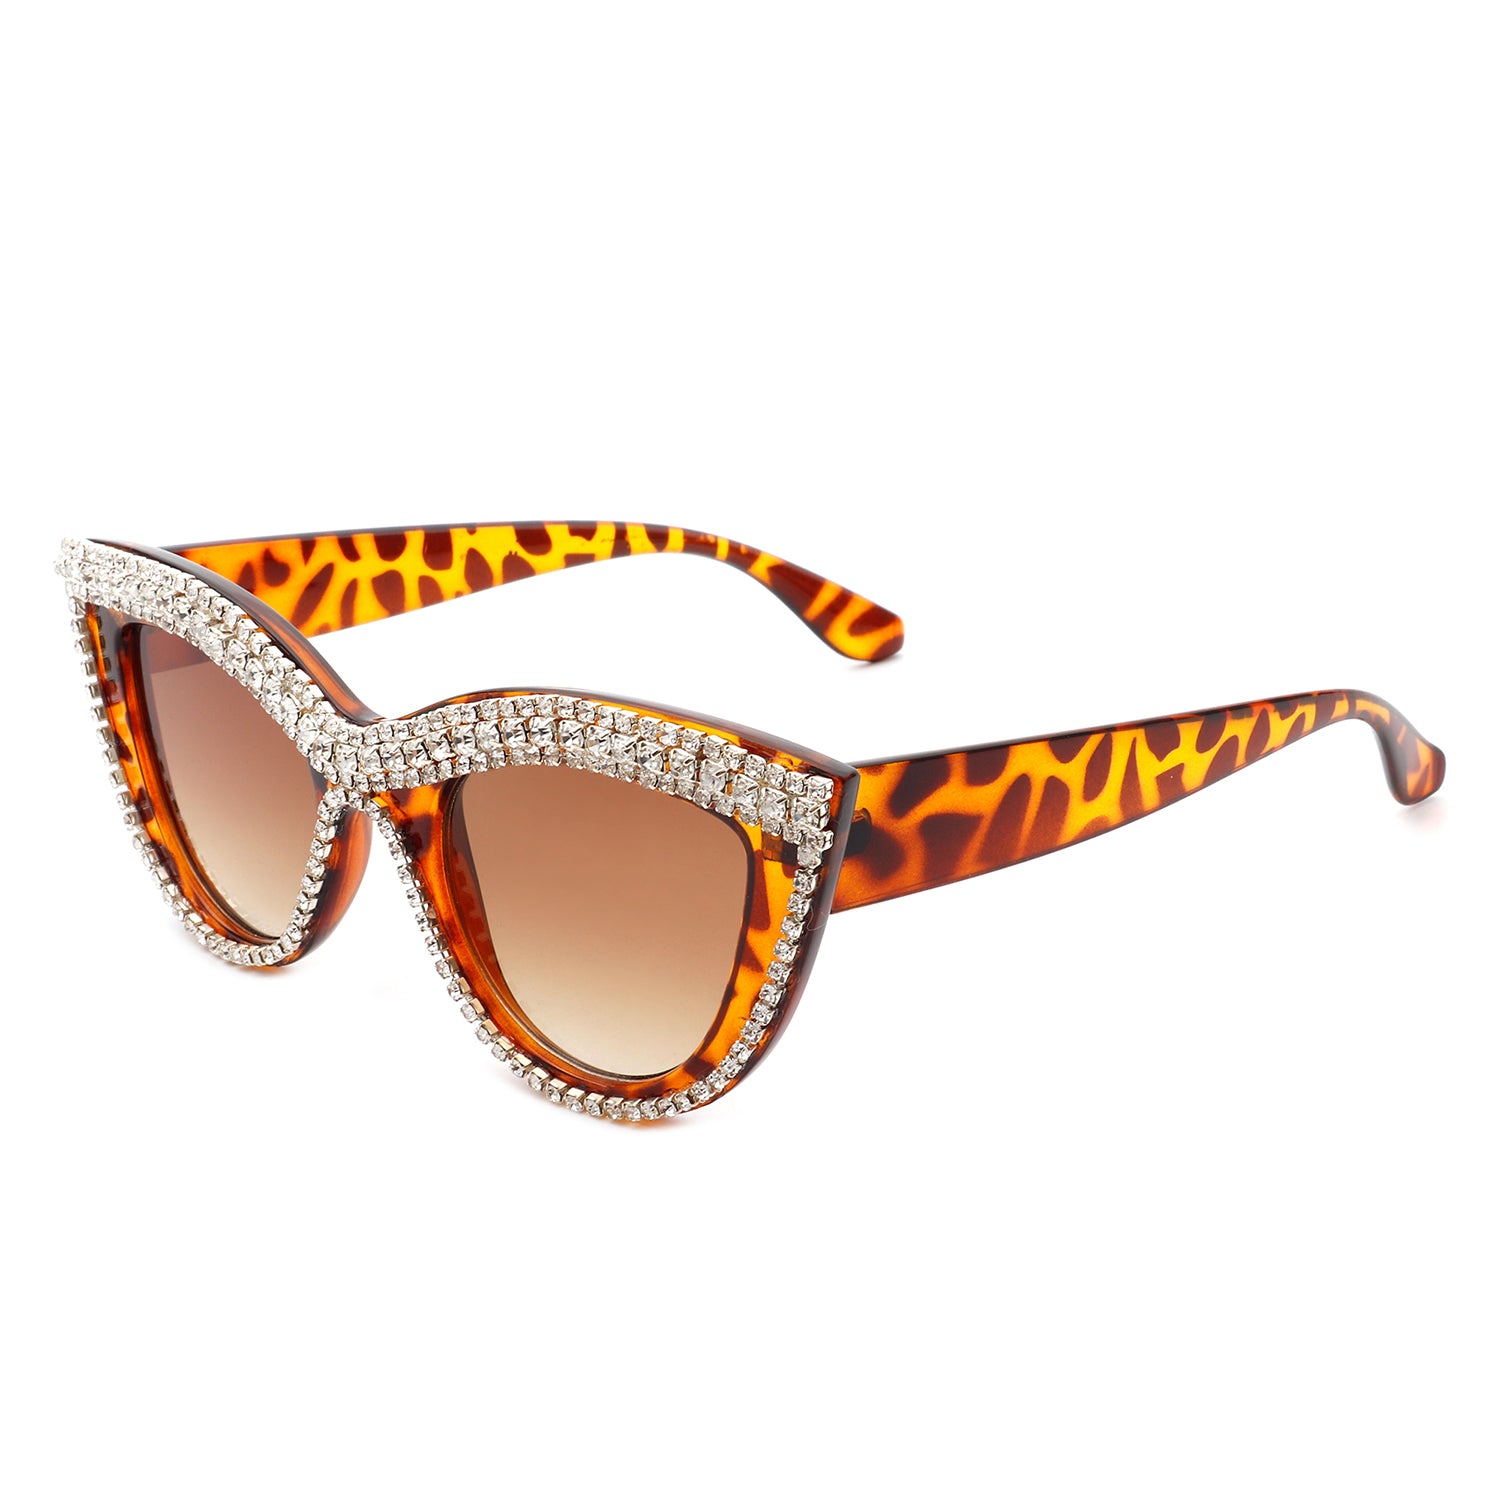 HS2084 - Iris Fashion - Iris Sunglasses